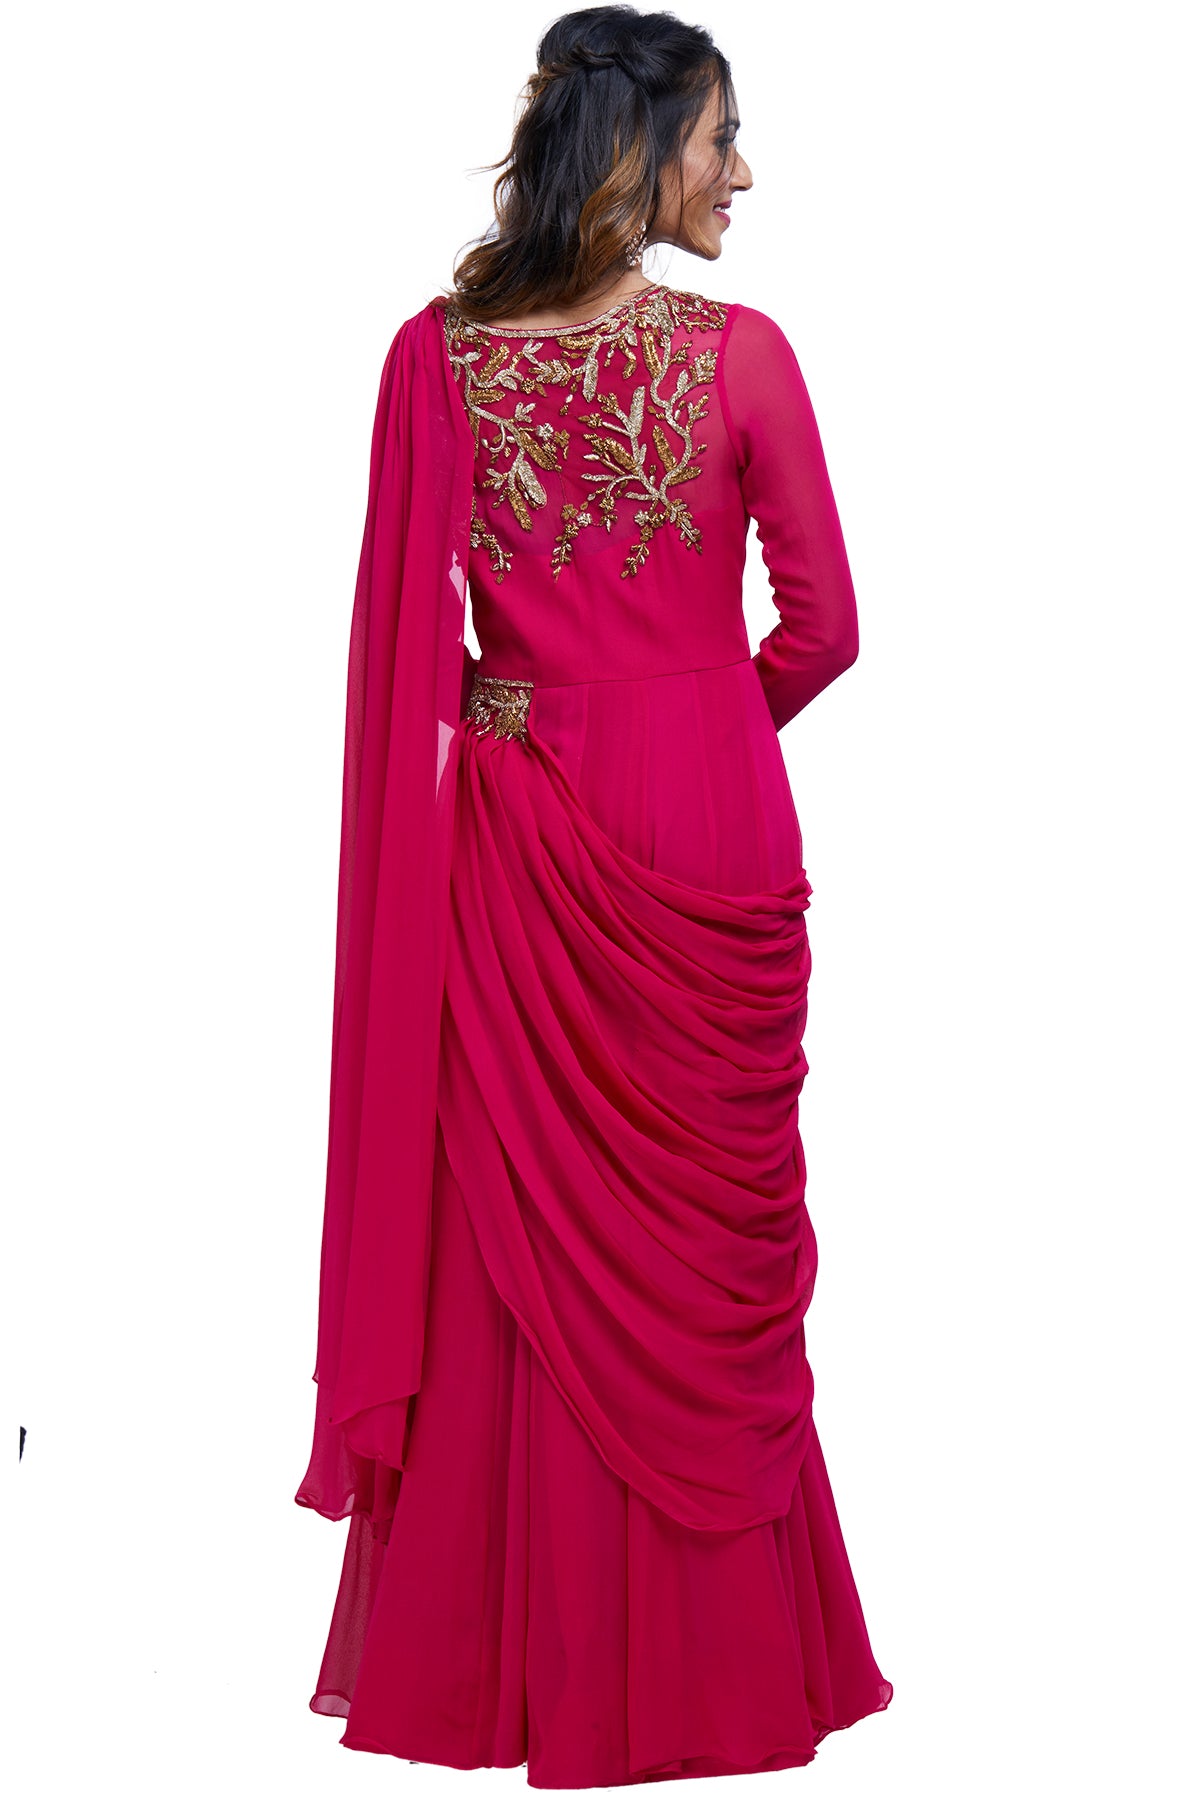 Buy Ojjasvi Women's Net Empire Mini Dress (OJ1044_S_Pink_Small) at Amazon.in